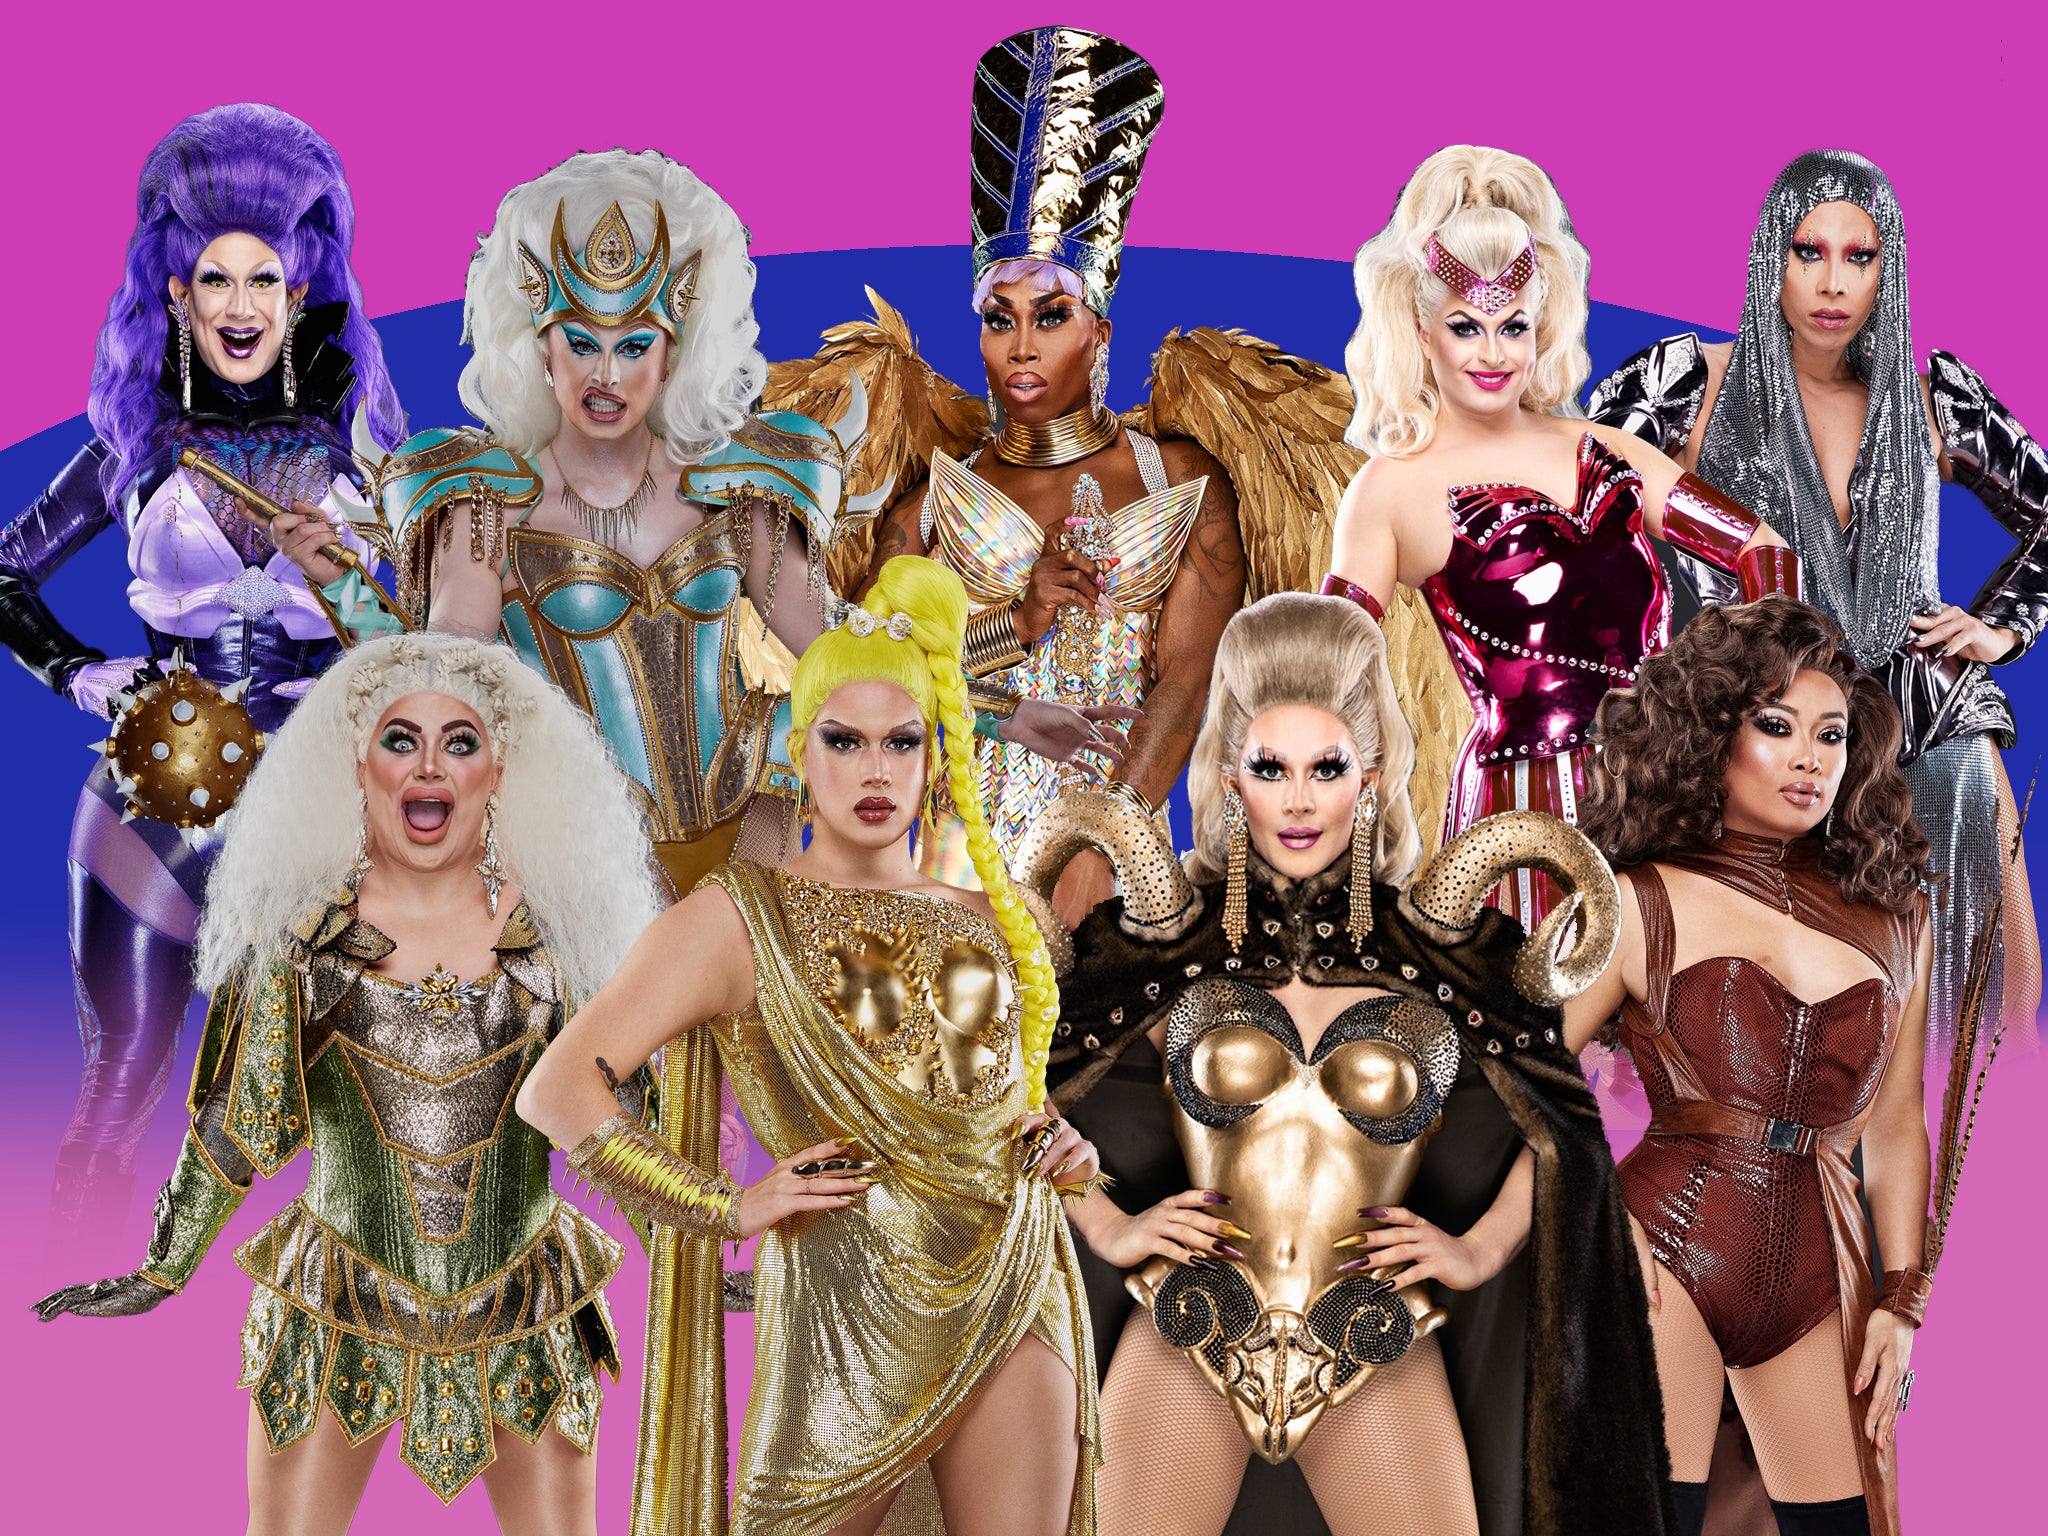 Queens of the world: Clockwise from top left – Jimbo, Blu Hydrangea, Mo Heart, Cheryl Hole, Pangina Heals, Jujubee, Janey Jacké, Lemon, Baga Chipz